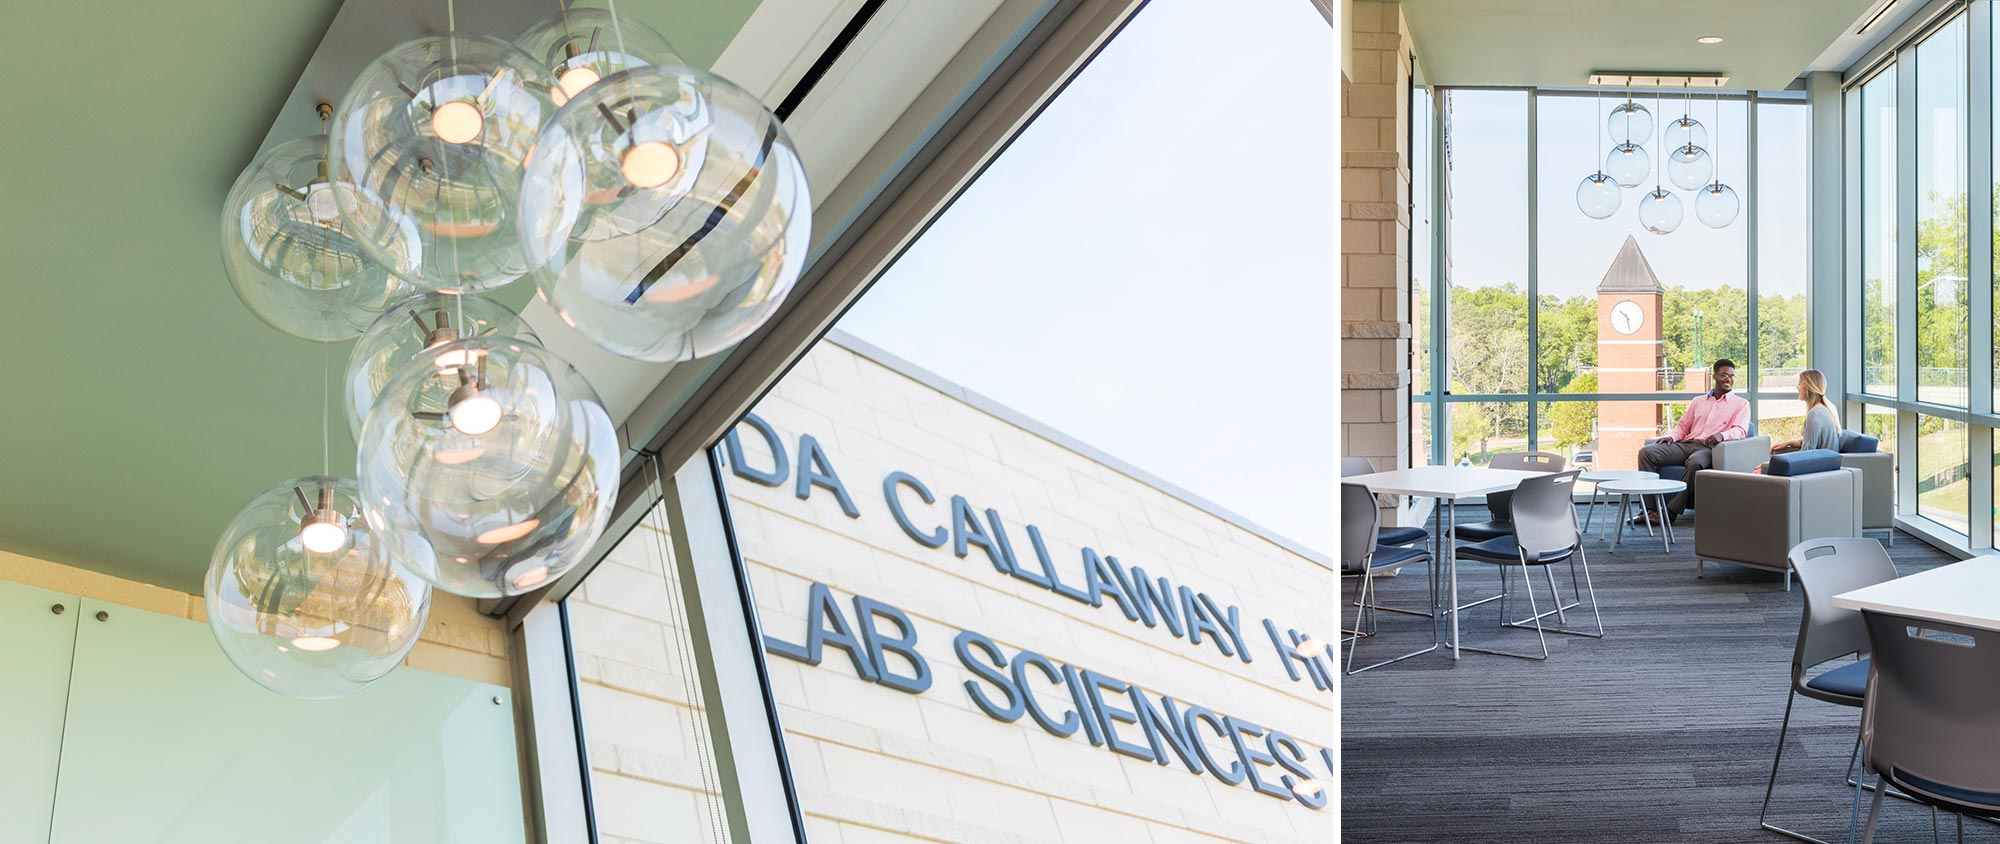 LaGrange College, Ida Callaway Hudson Lab Sciences Building